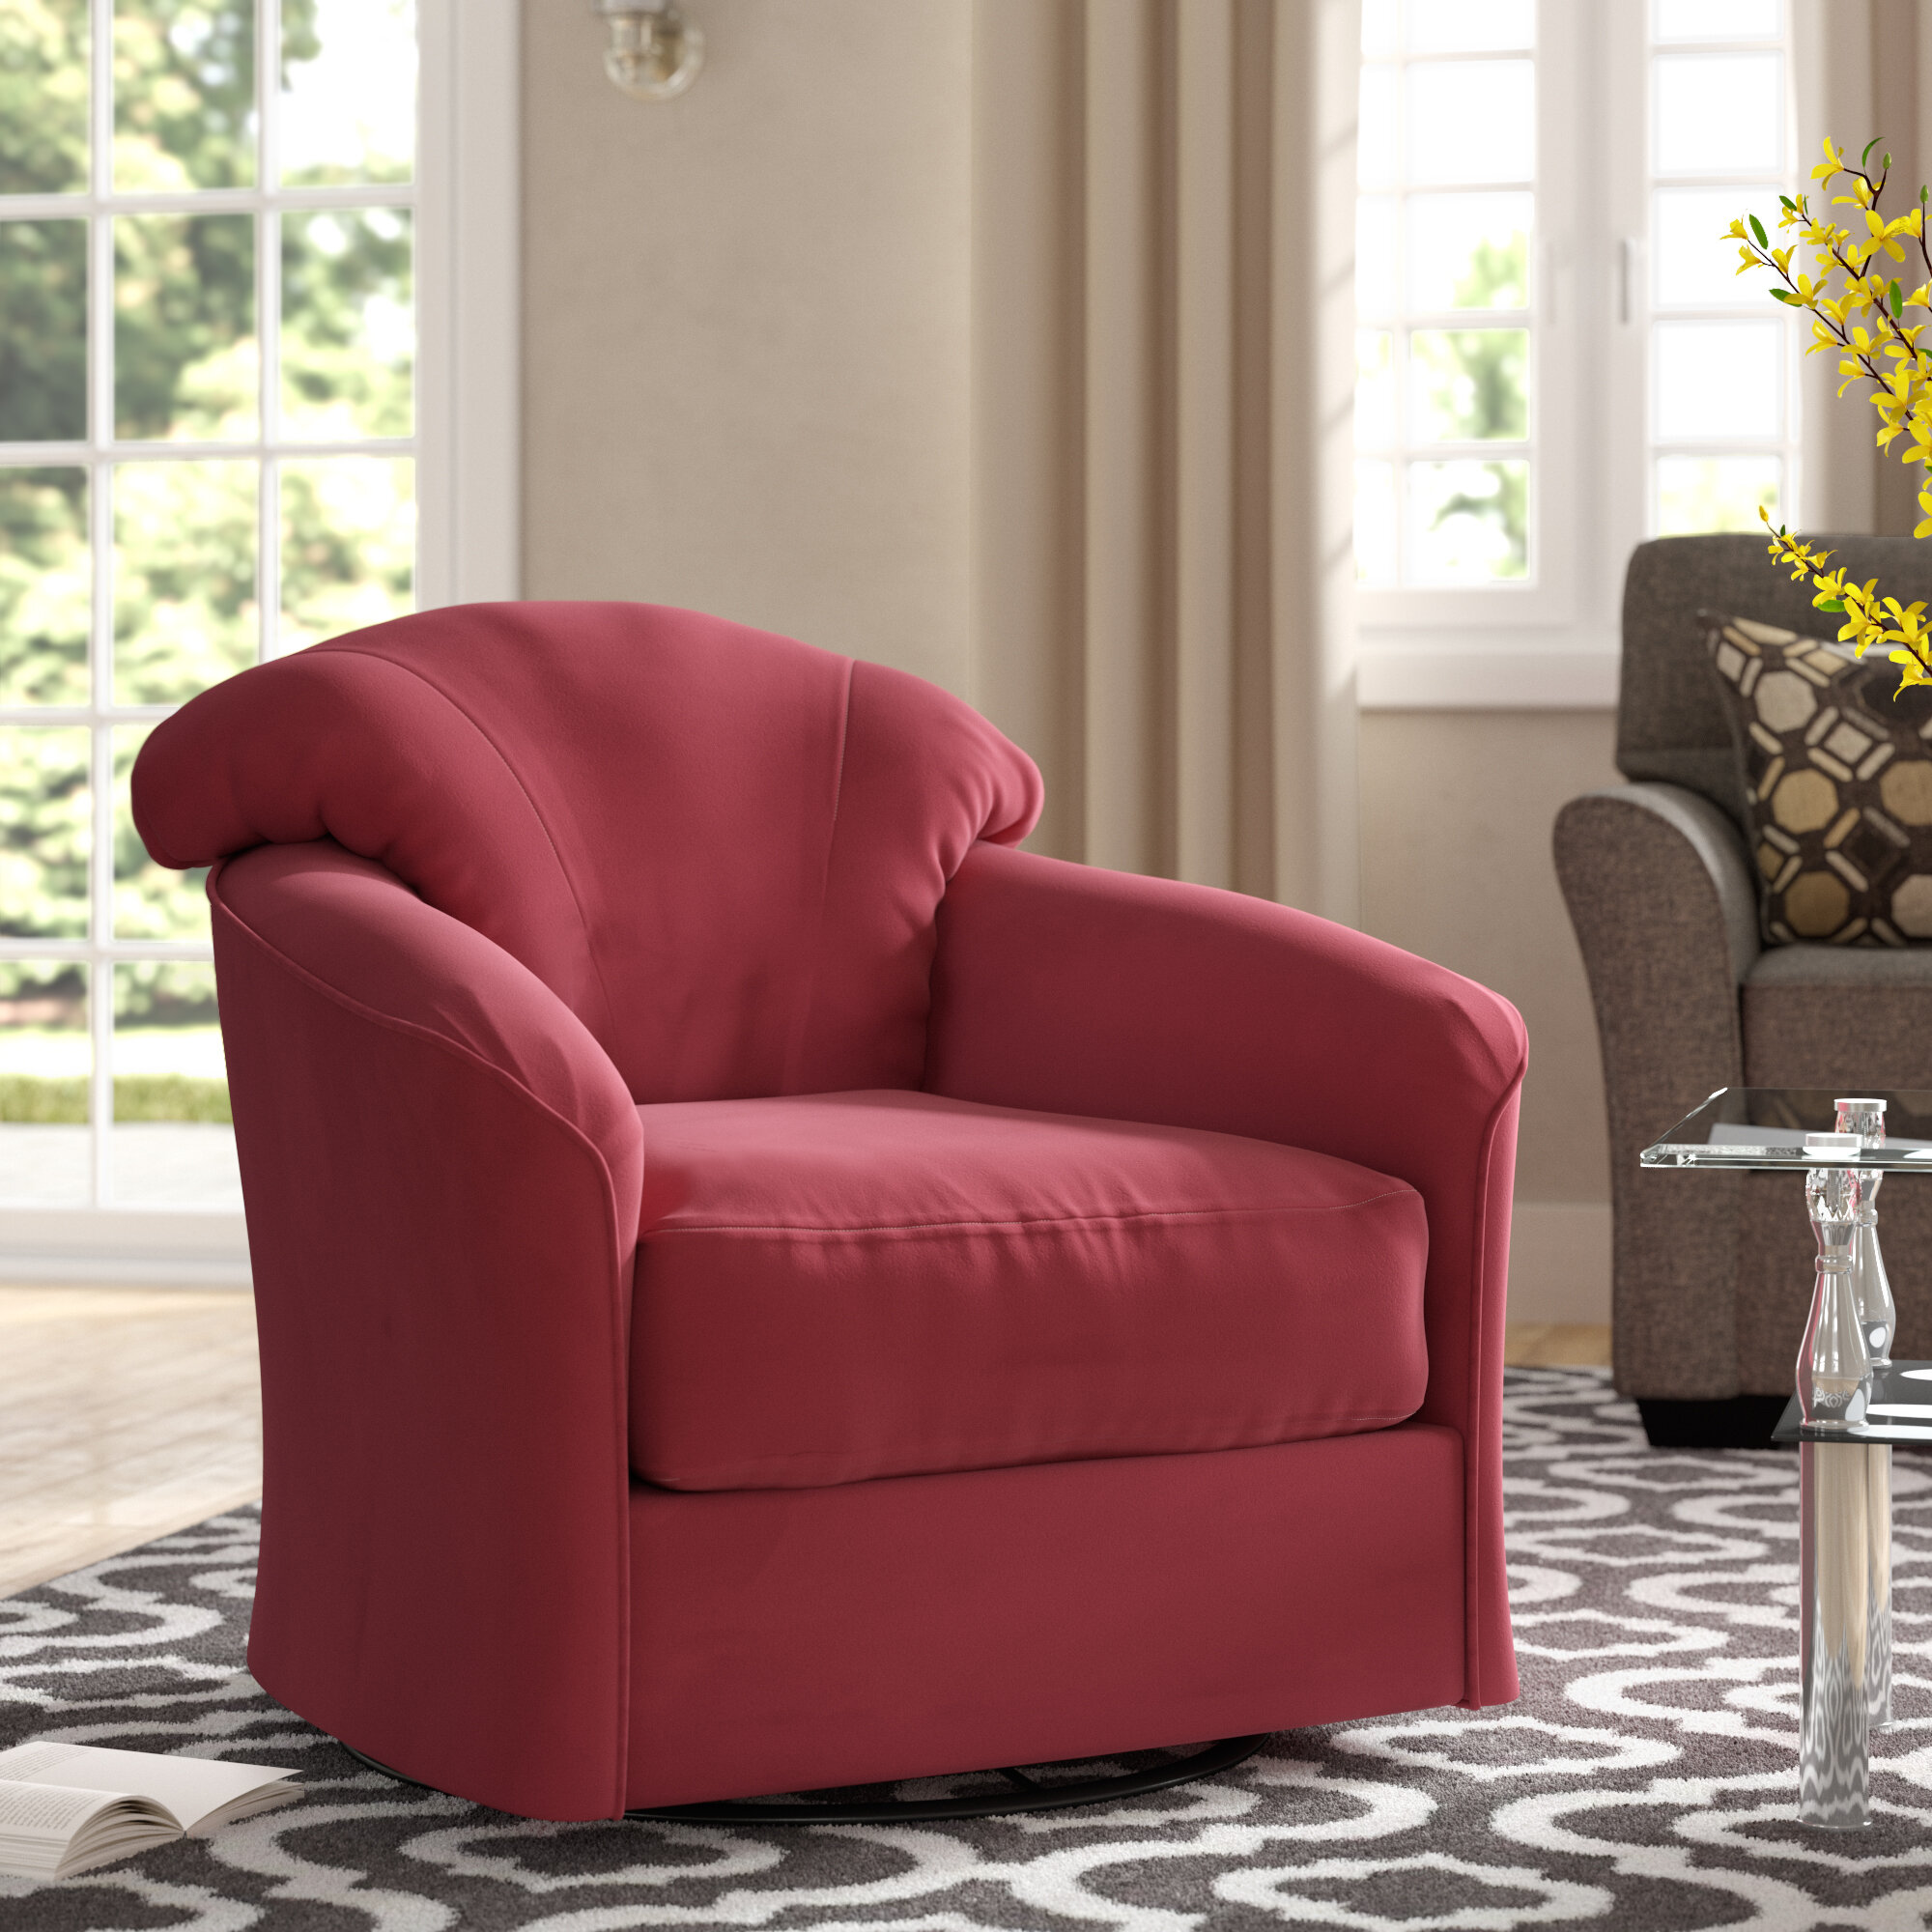 Klaussner Furniture Exeter Swivel Barrel Chair Reviews Wayfair